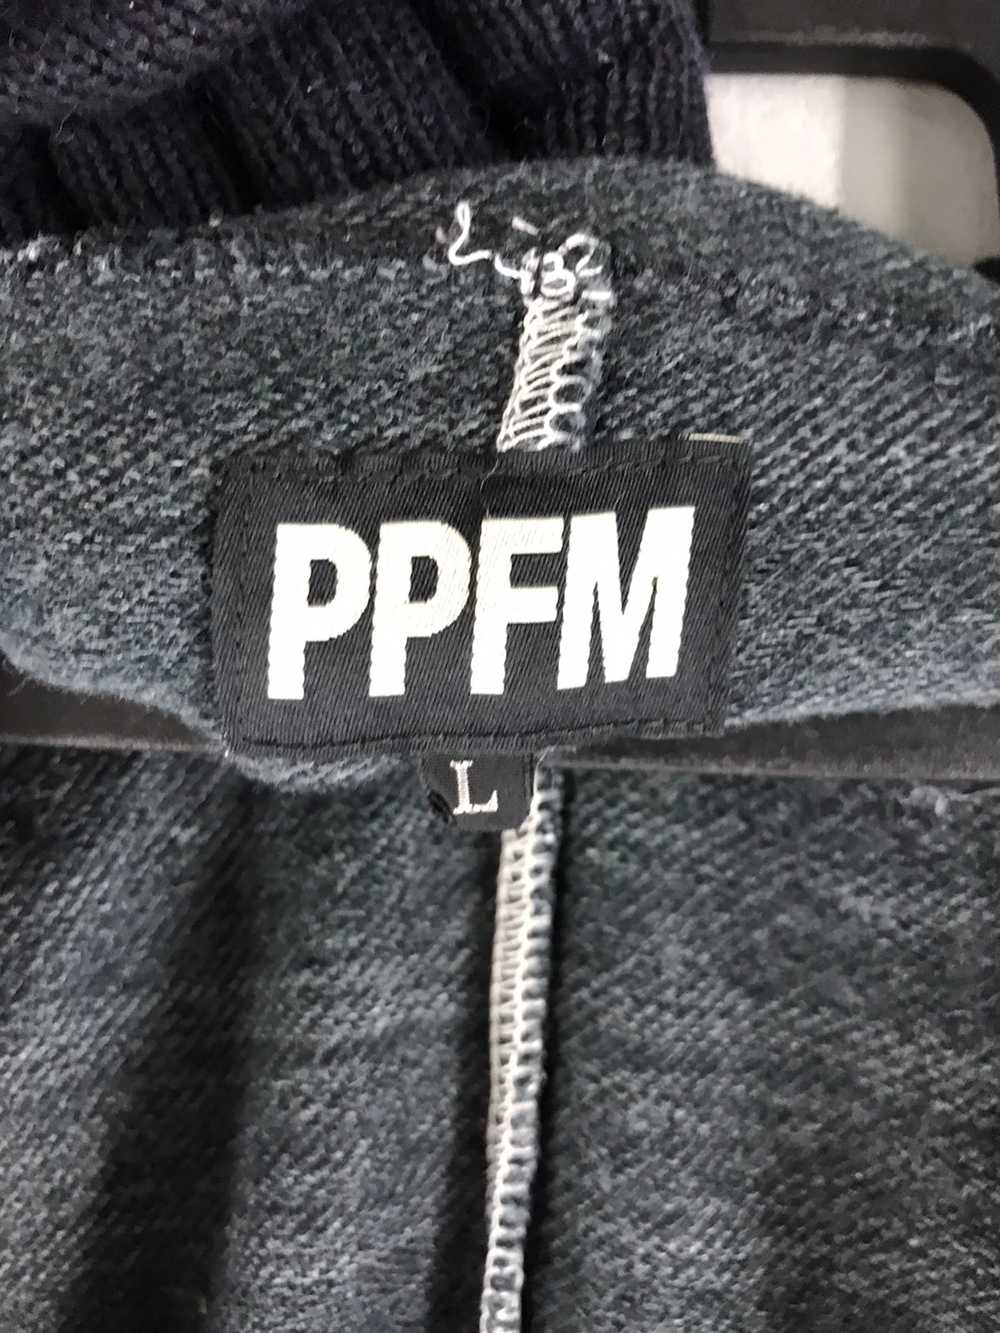 PPFM - PEYTON PLACE FOR MEN CARDIGAN - image 6